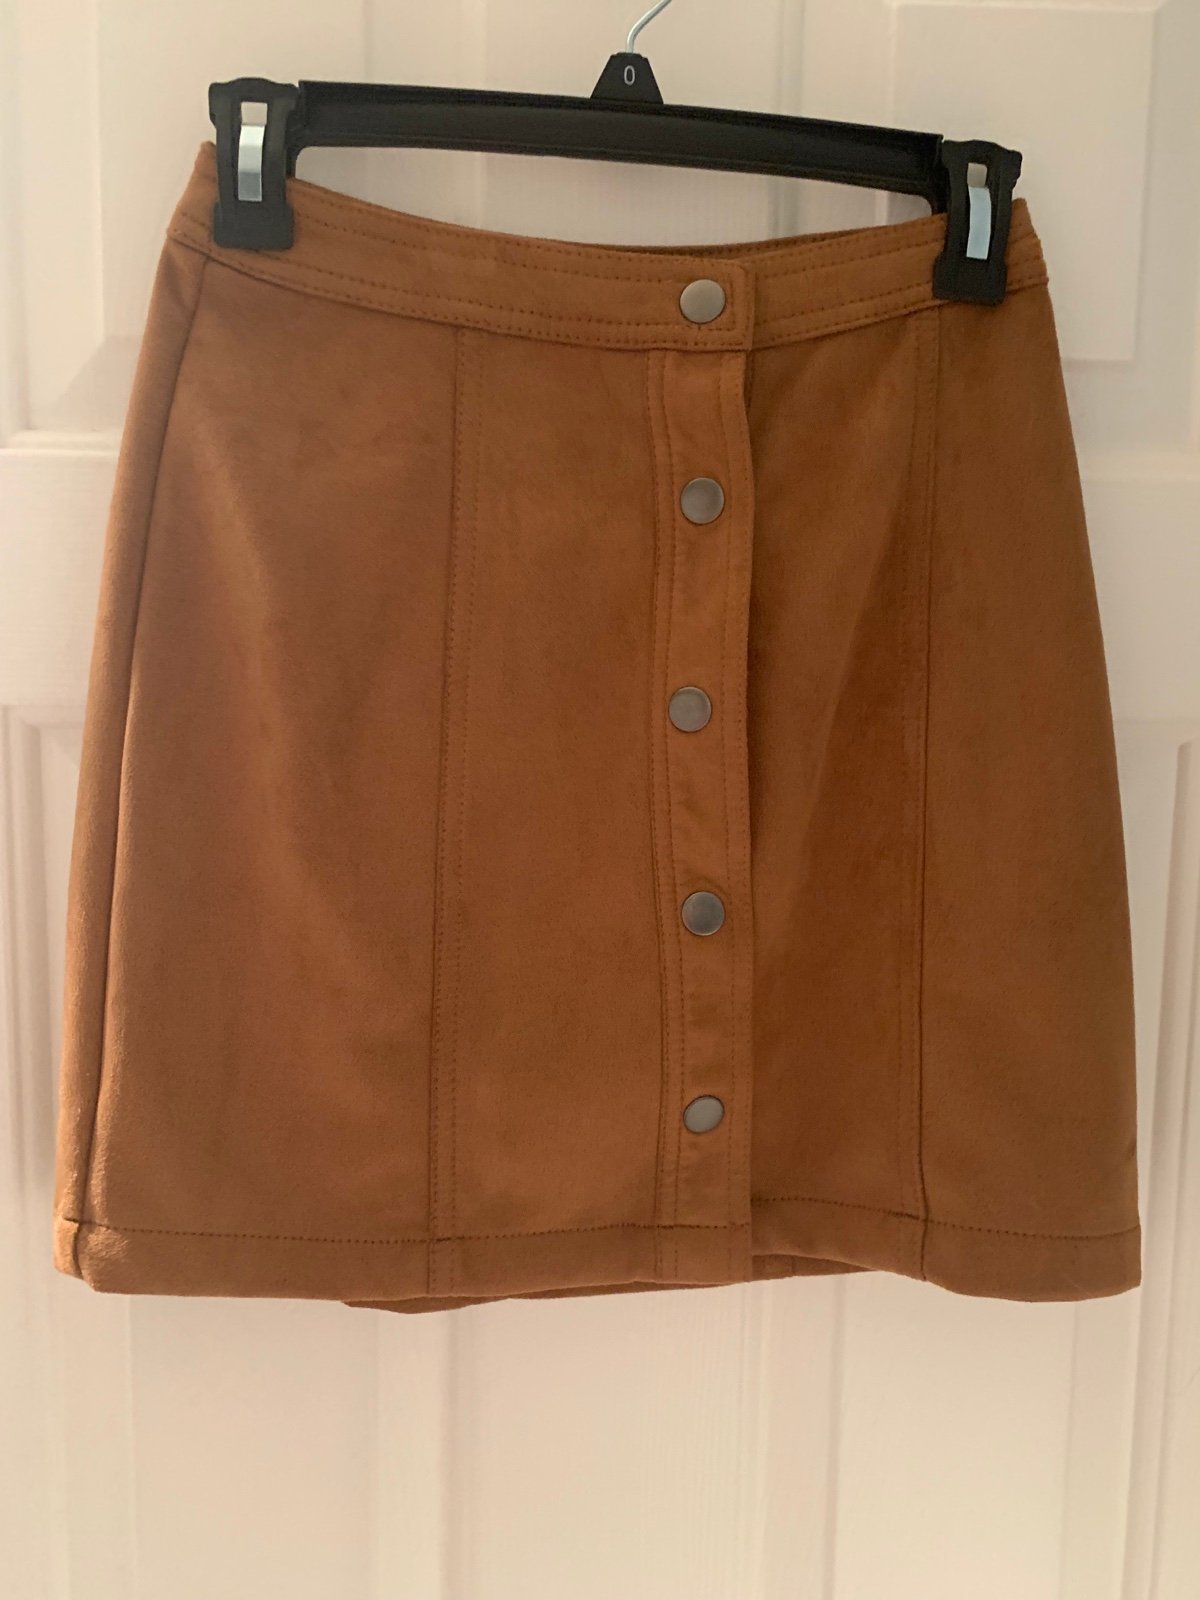 high discount Cute tan skirt i3ZWLNV5t Discount